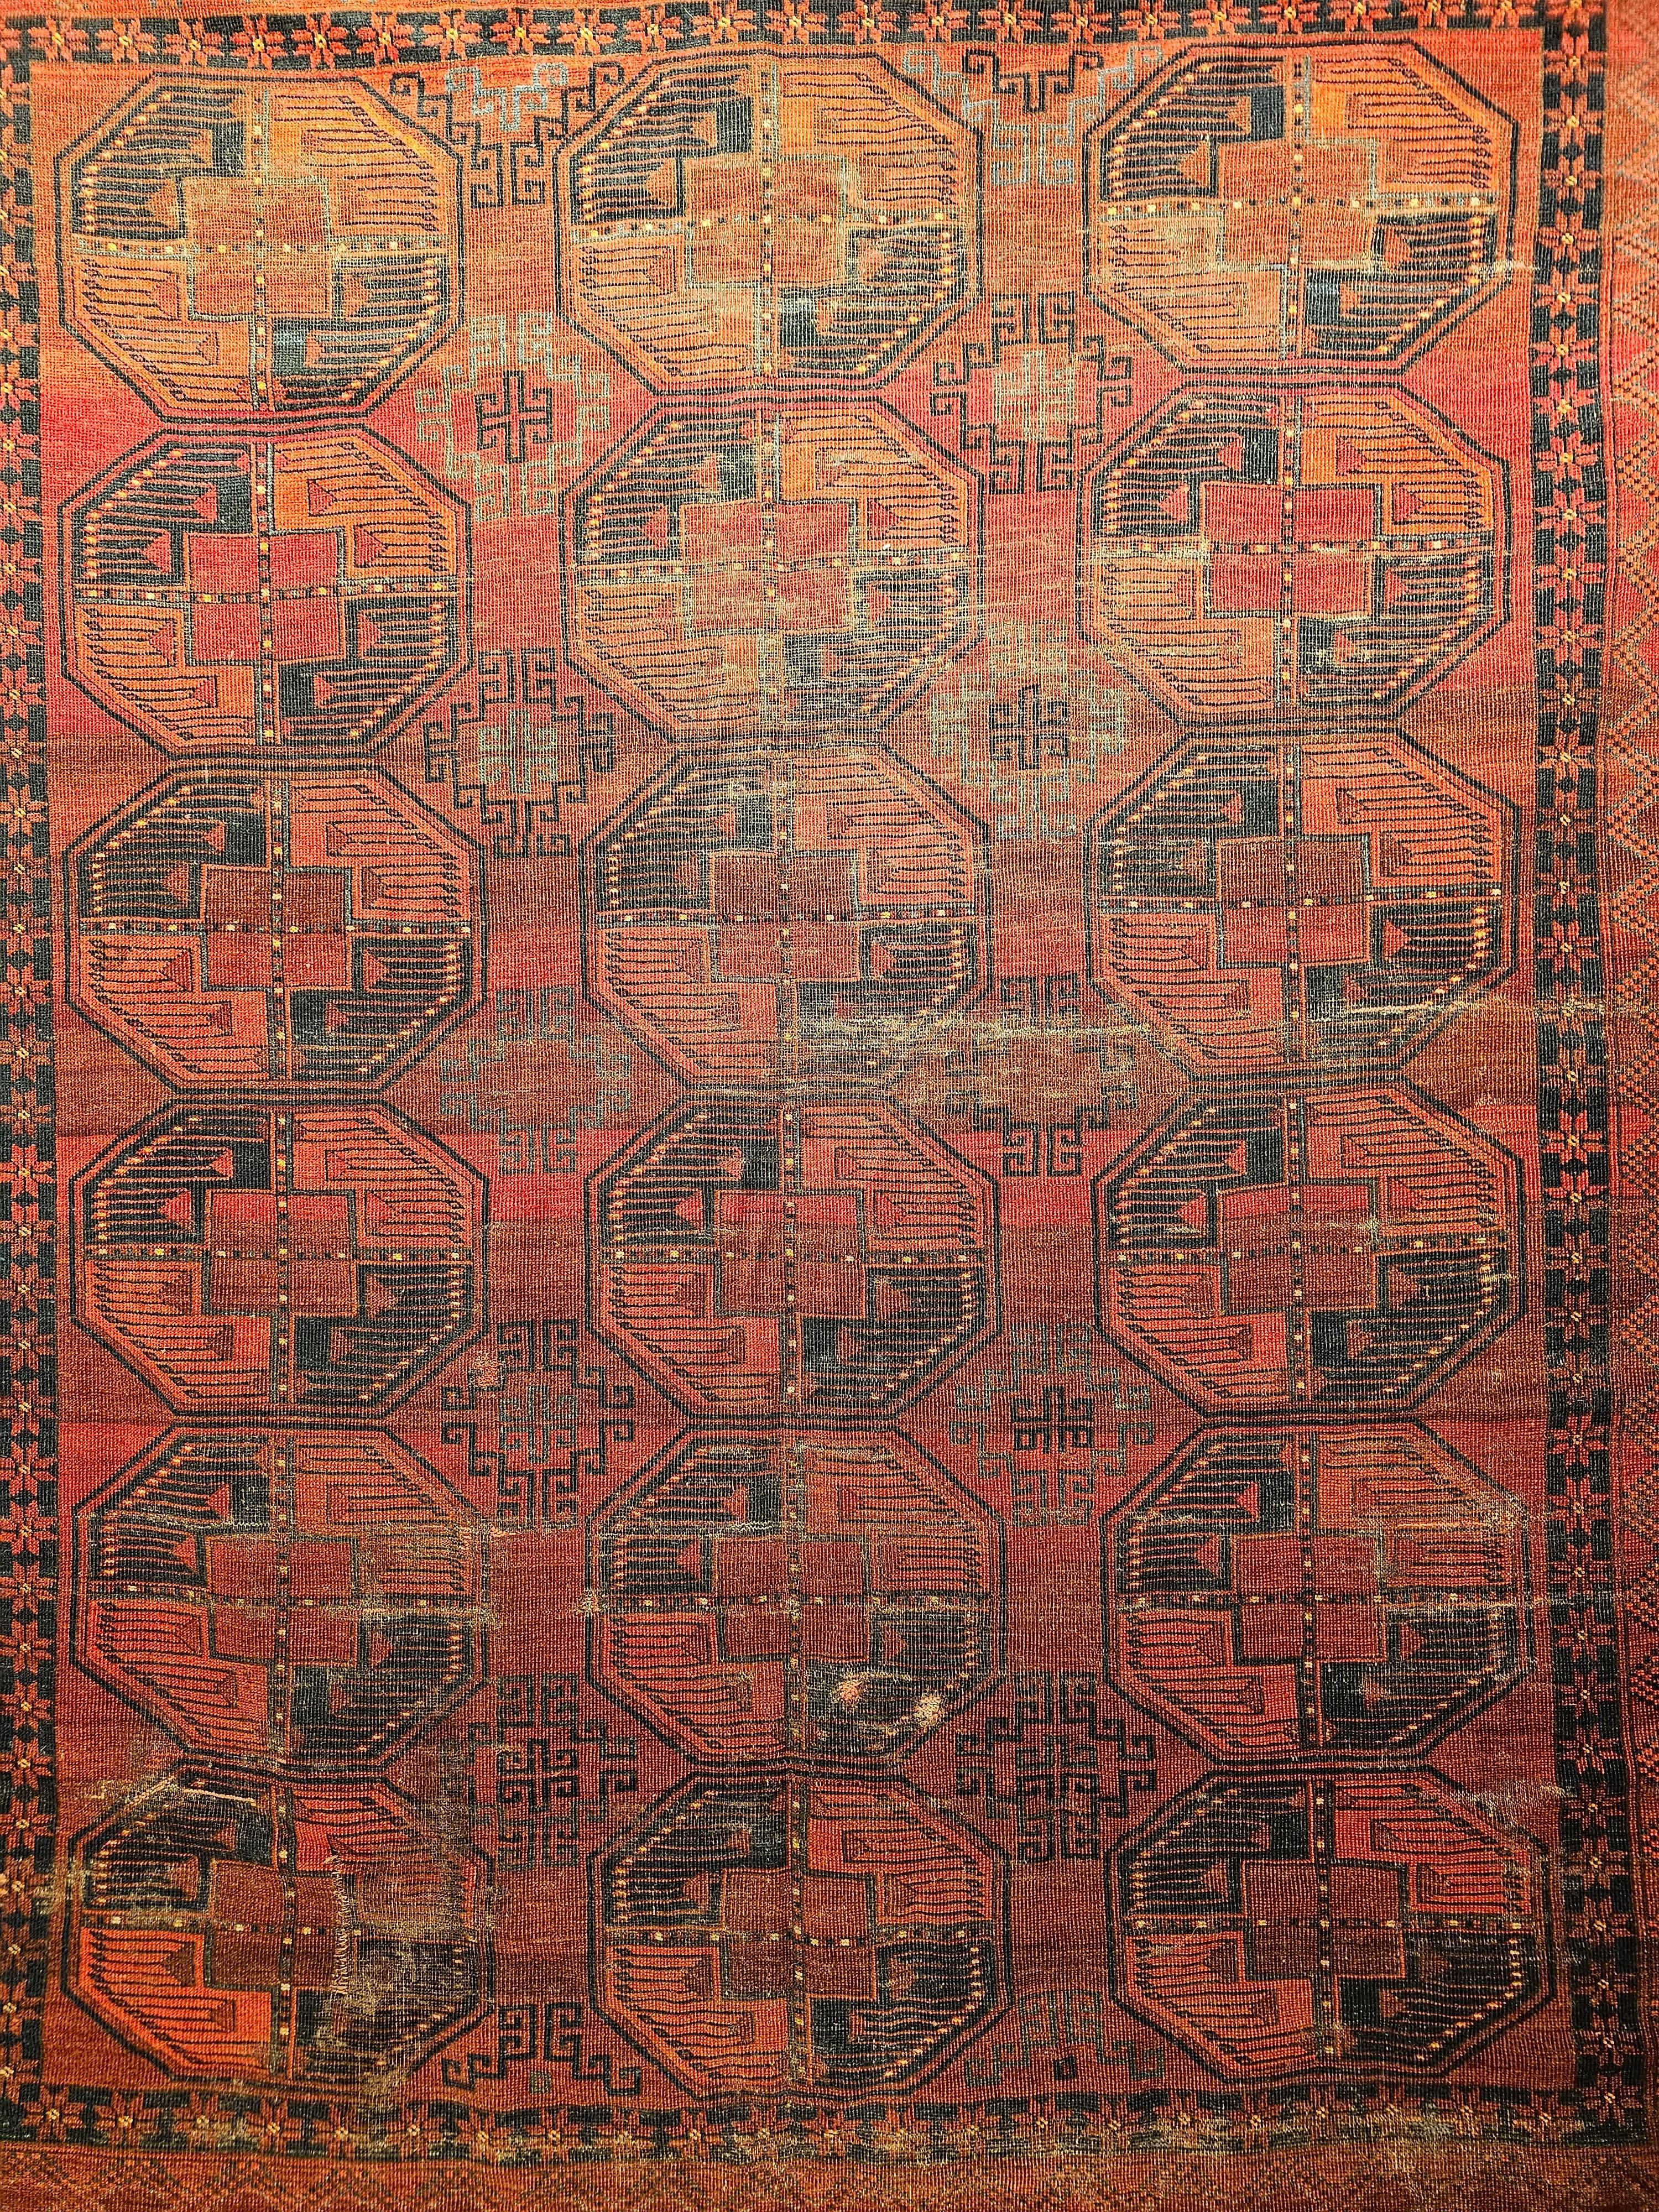 A “near square” room-size Turkmen Ersari rug in an allover geometric 